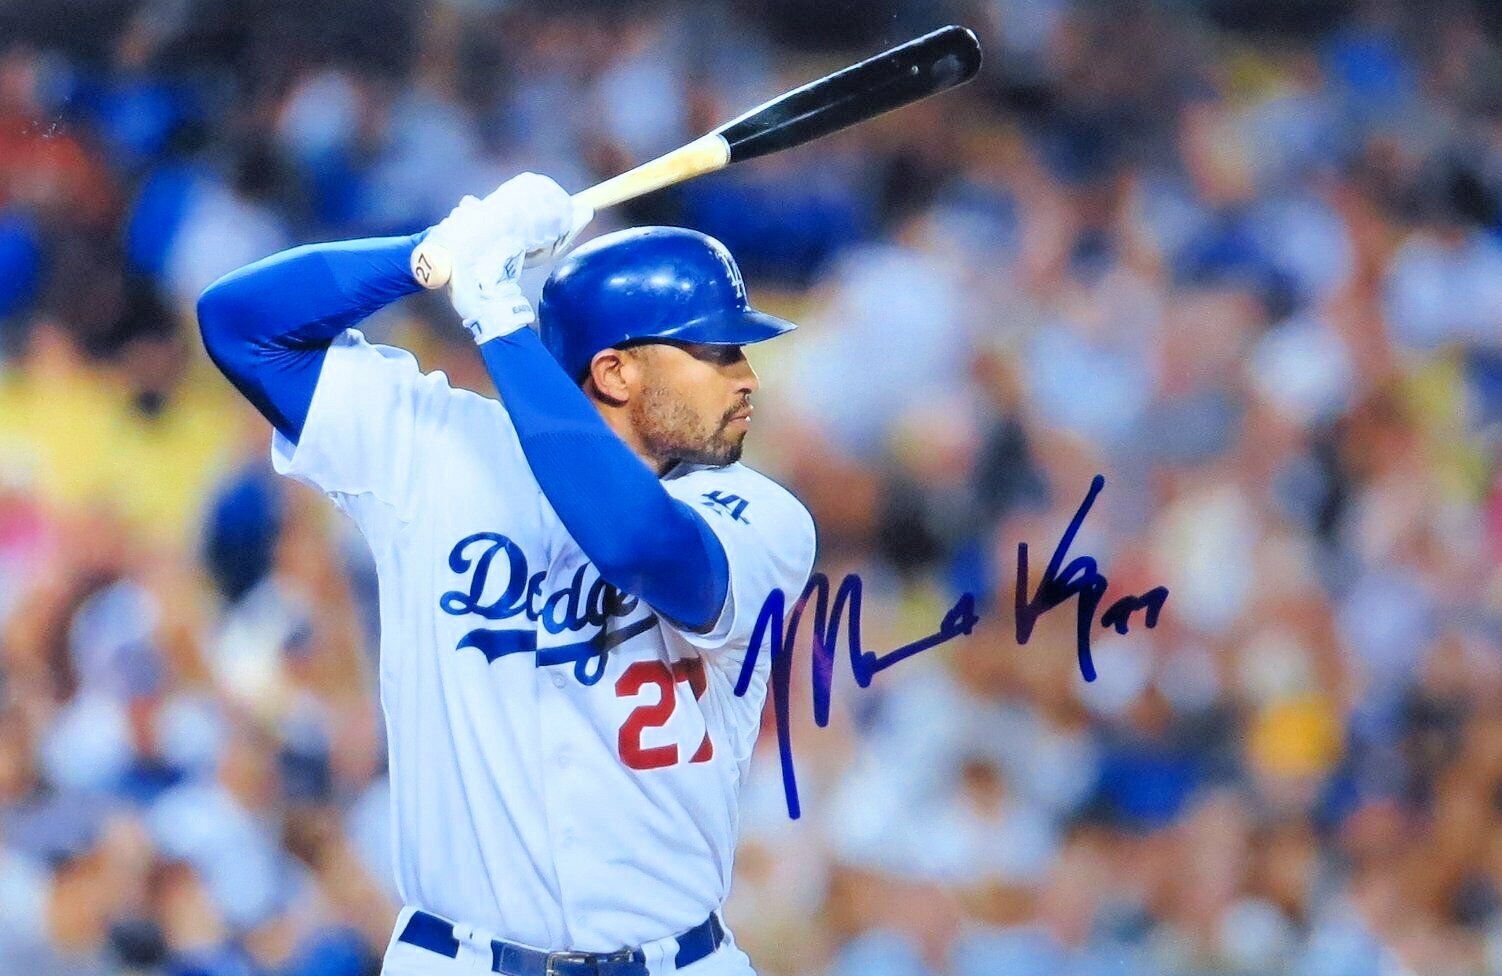 Matt Kemp Signed Autographed 12X18 Photo Poster painting Los Angeles Dodgers at Bat w/COA